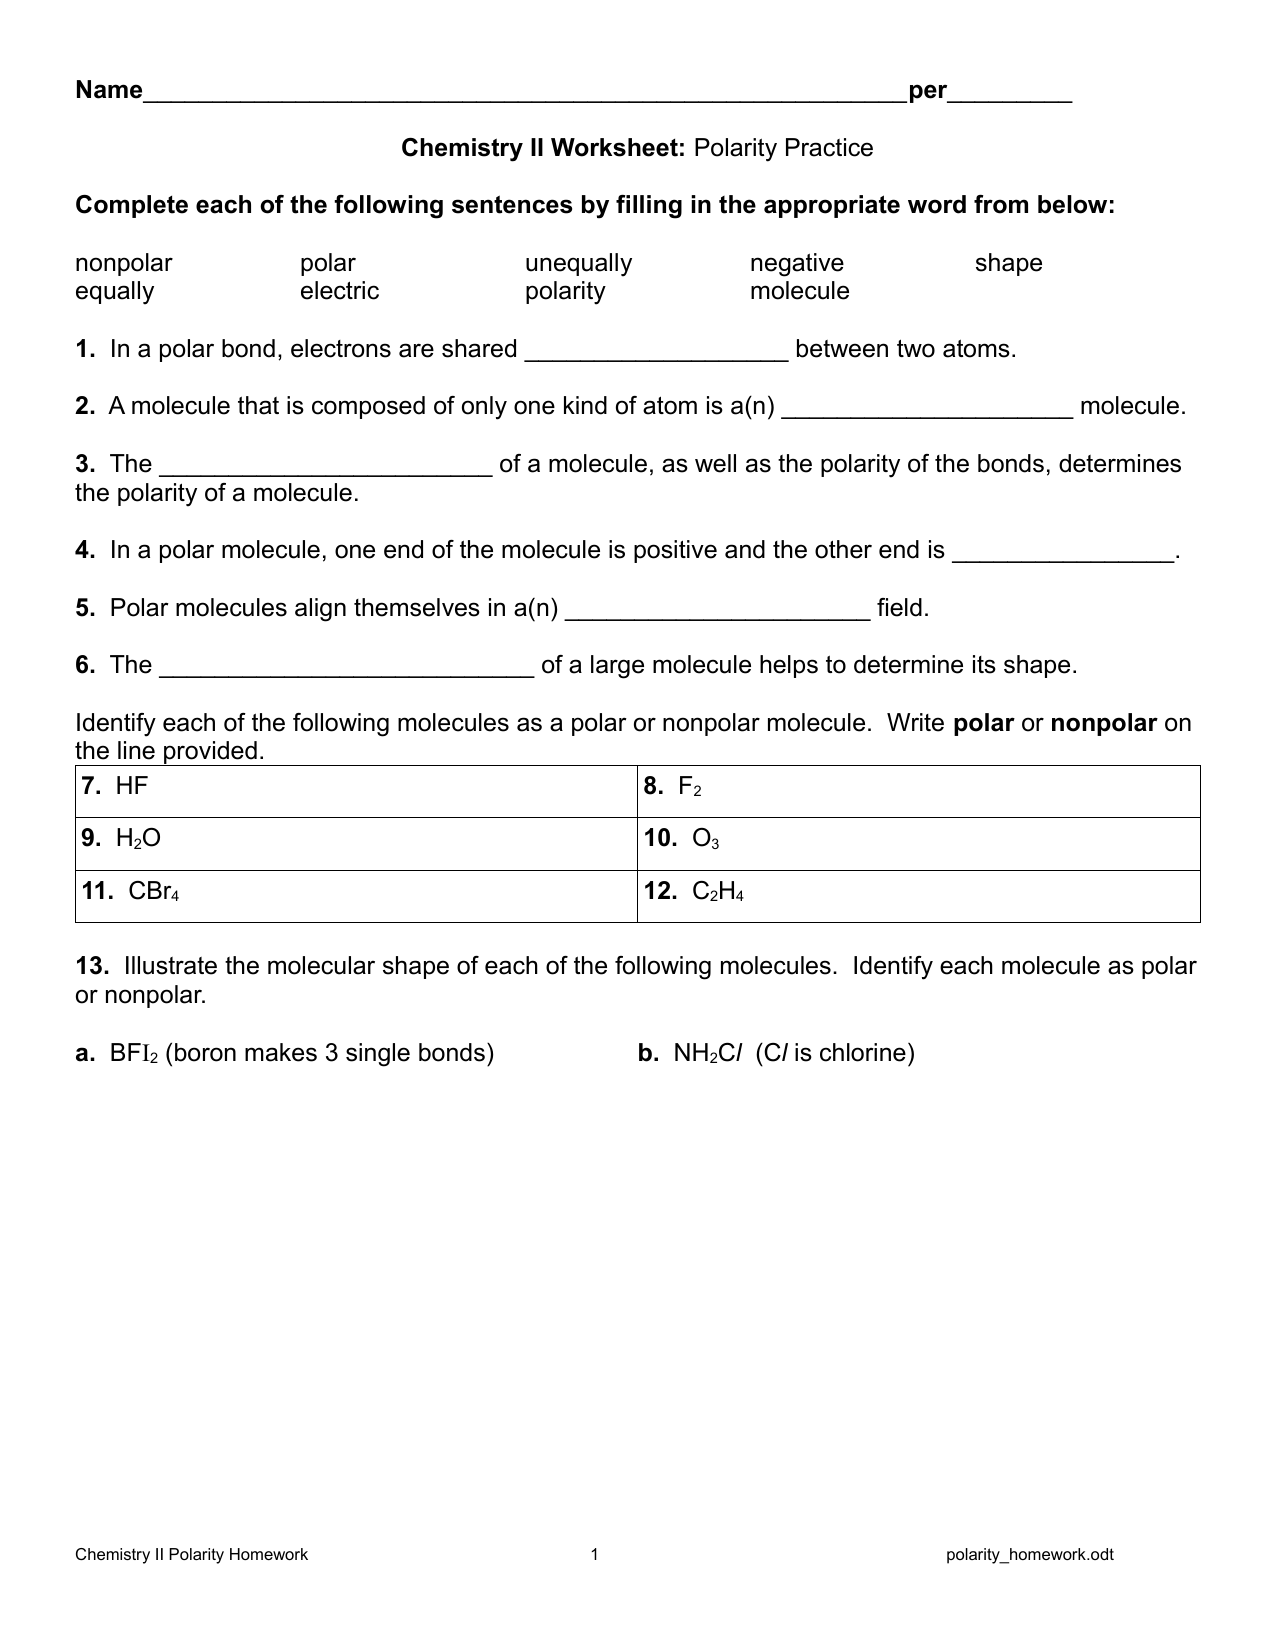 Chemistry II Polarity Homework In Worksheet Polarity Of Bonds Answers